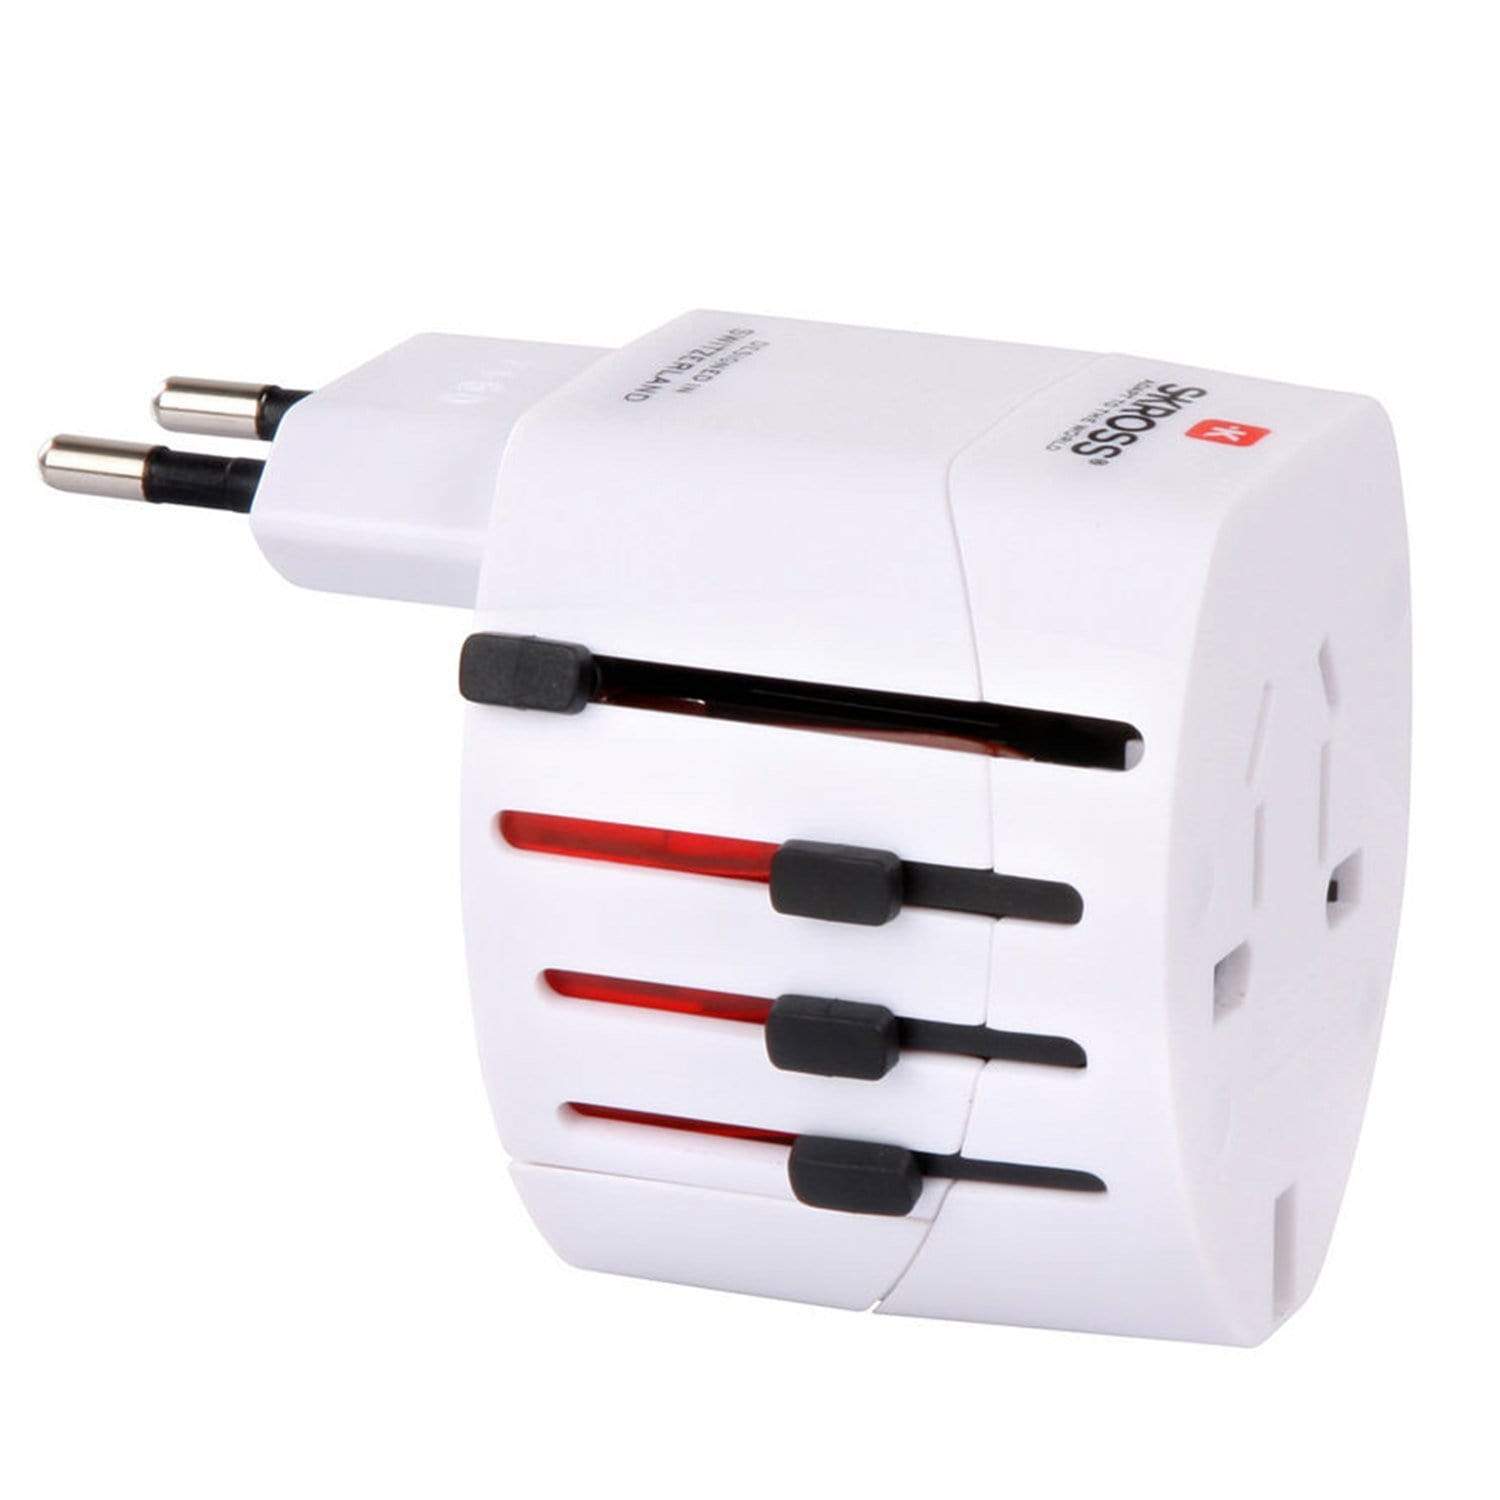 Skross Evo Multi Plug World Adapter without USB - White - 1102100 - Jashanmal Home